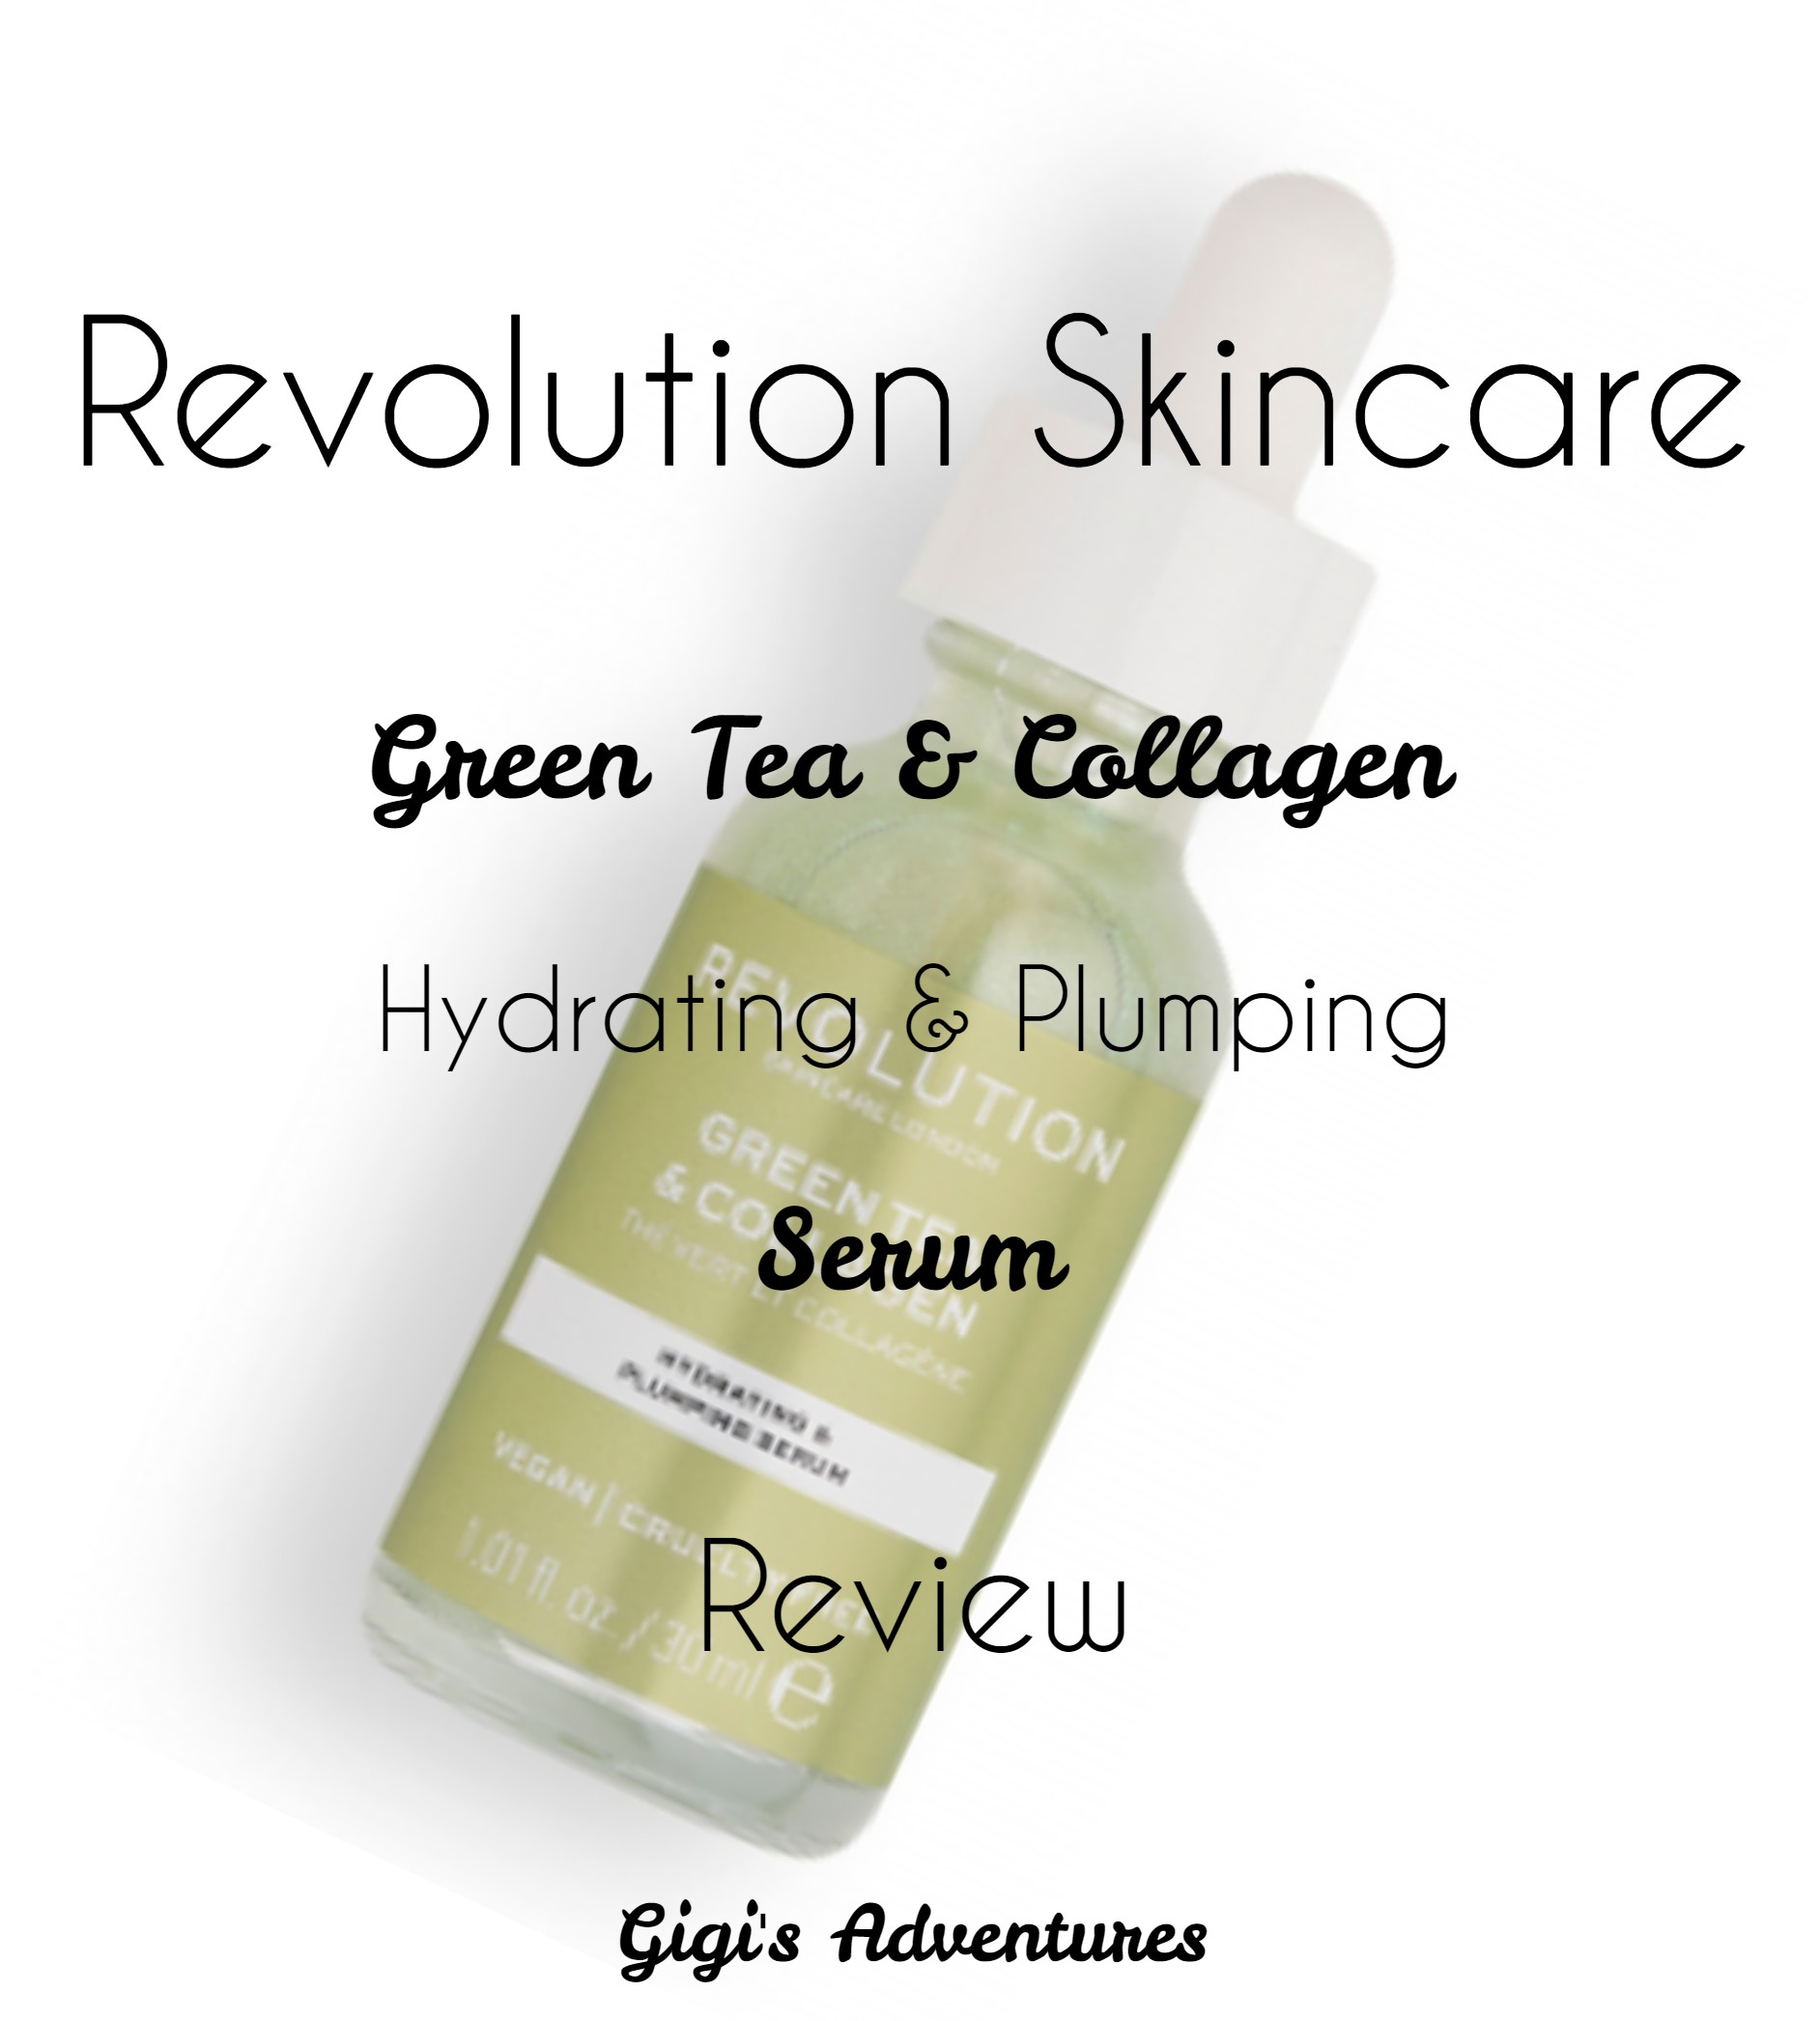 Revolution Skincare Green Tea & Collagen Hydrating & Plumping Serum Review